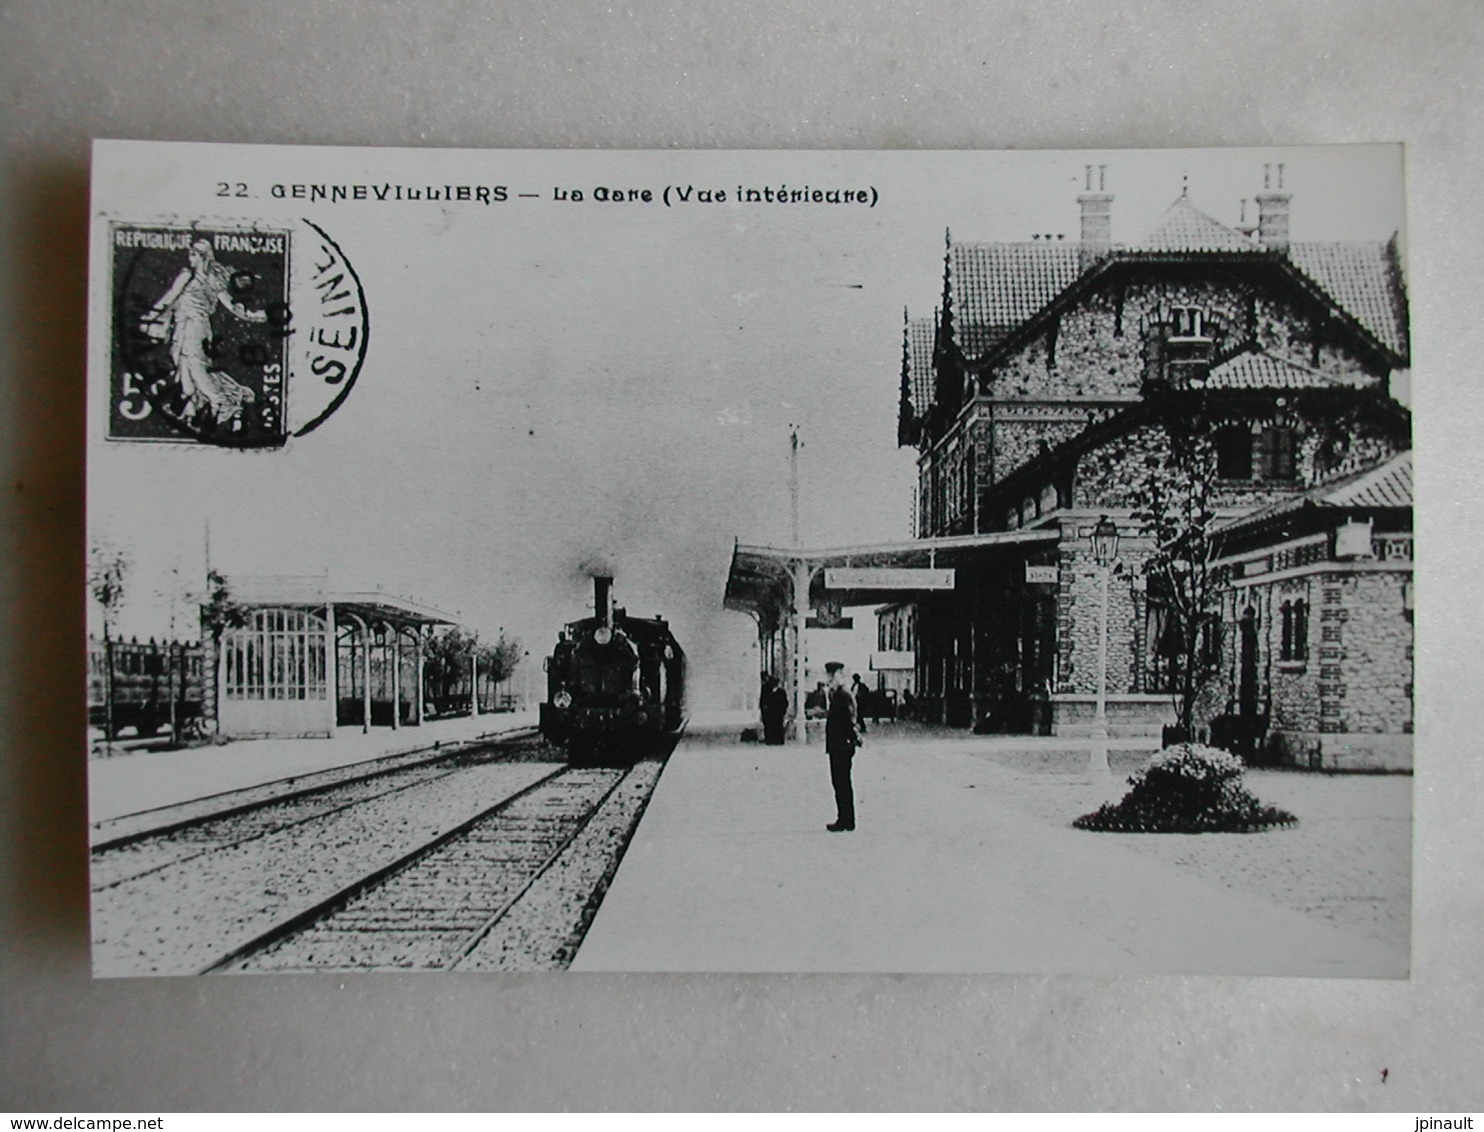 PHOTO Repro De CPA - Gare - La Gare De Gennevilliers - Trains